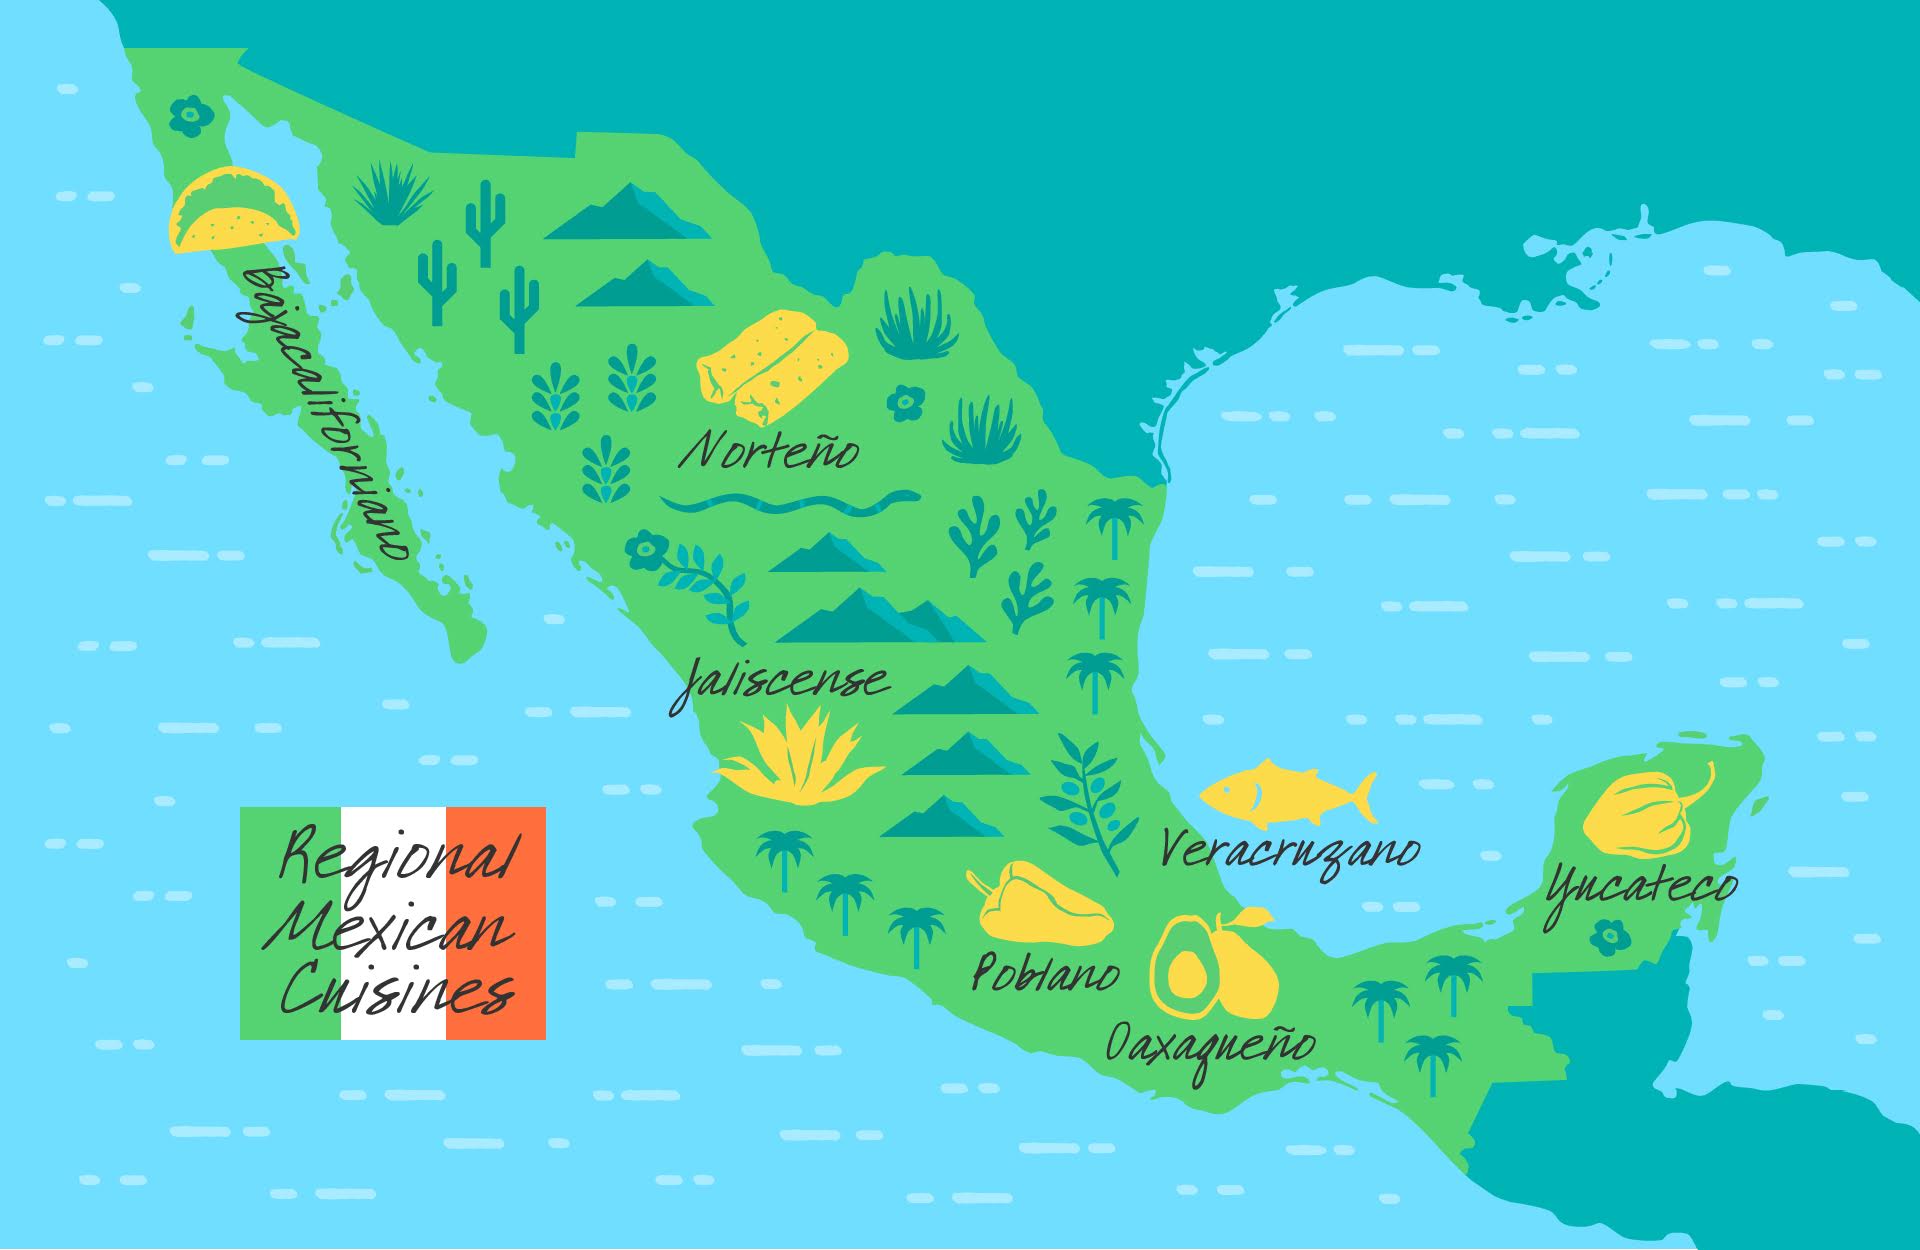 Regional Mexican Charts